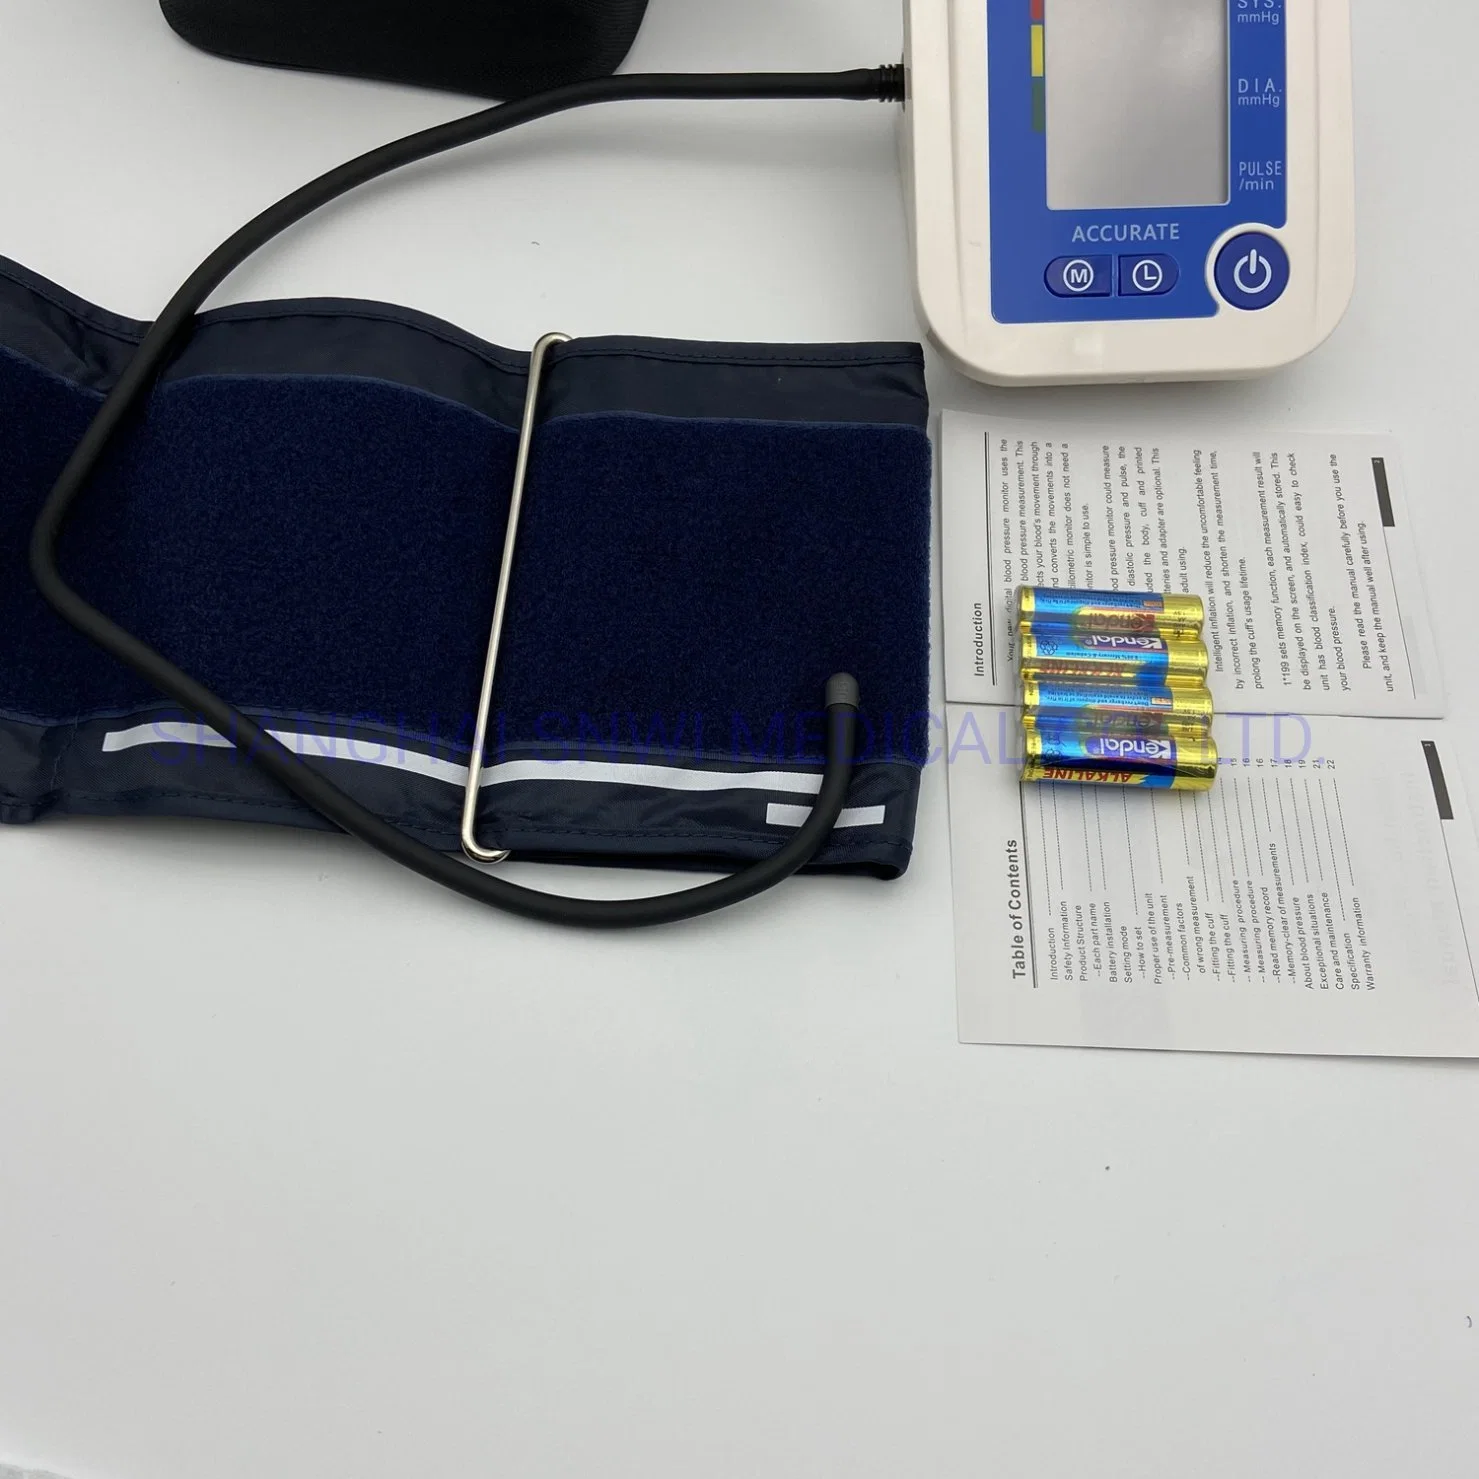 Hot Selling Bp Machine Medical Automatic Electronic Upper Arm Digital U82rh Blood Pressure Monitor